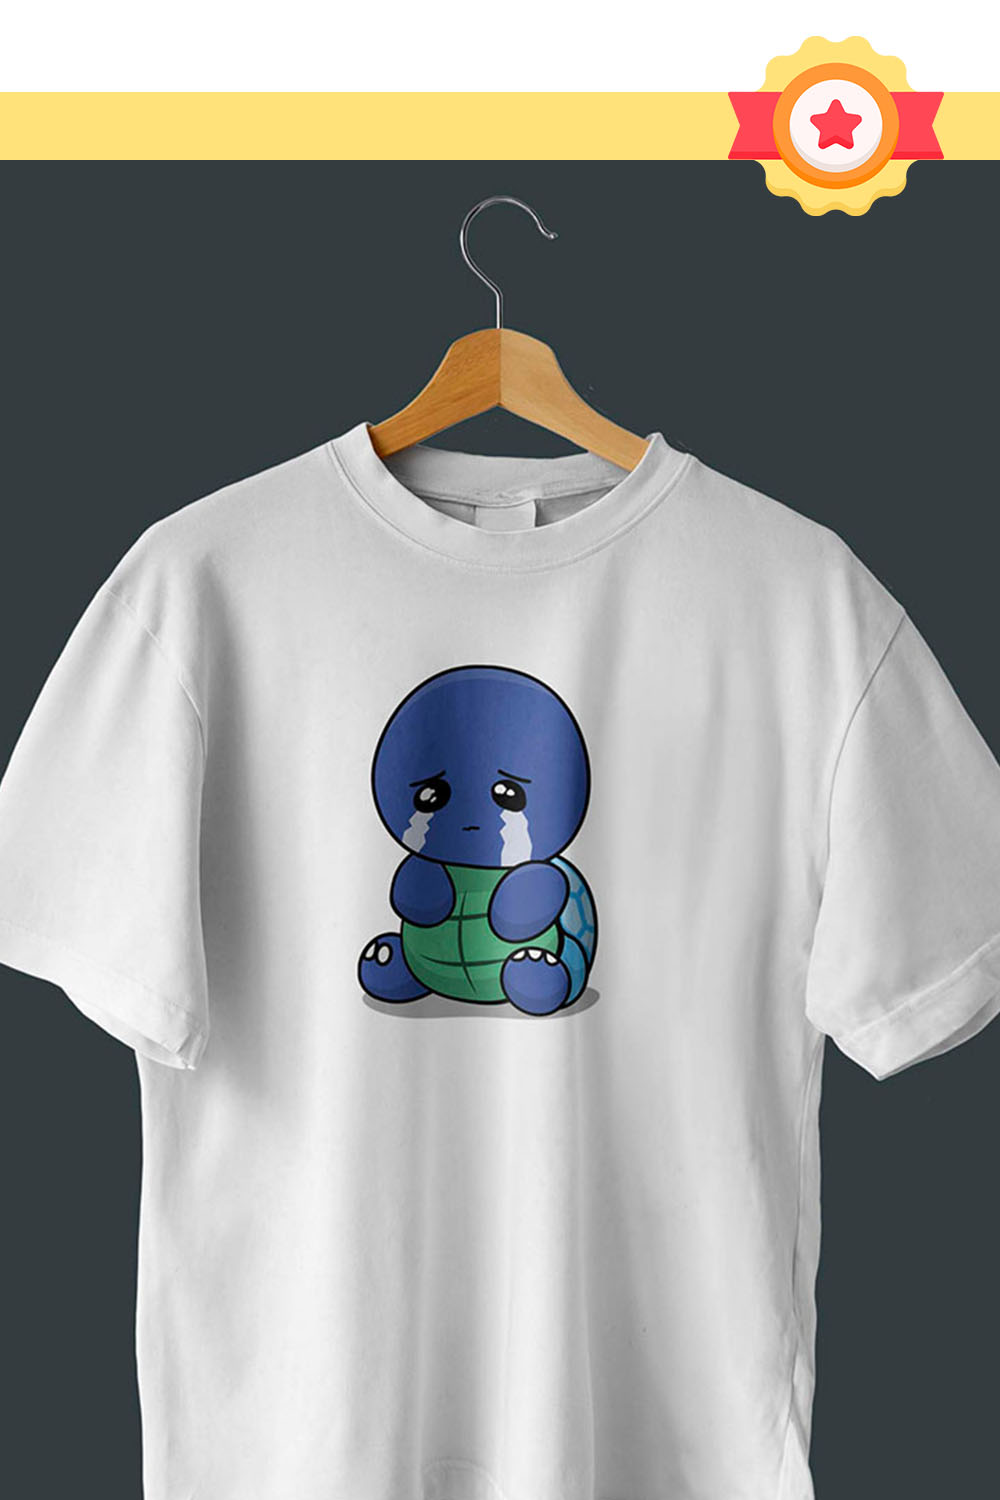 Cute Sad Turtle Illustration T-Shirt Design Pinterest image.